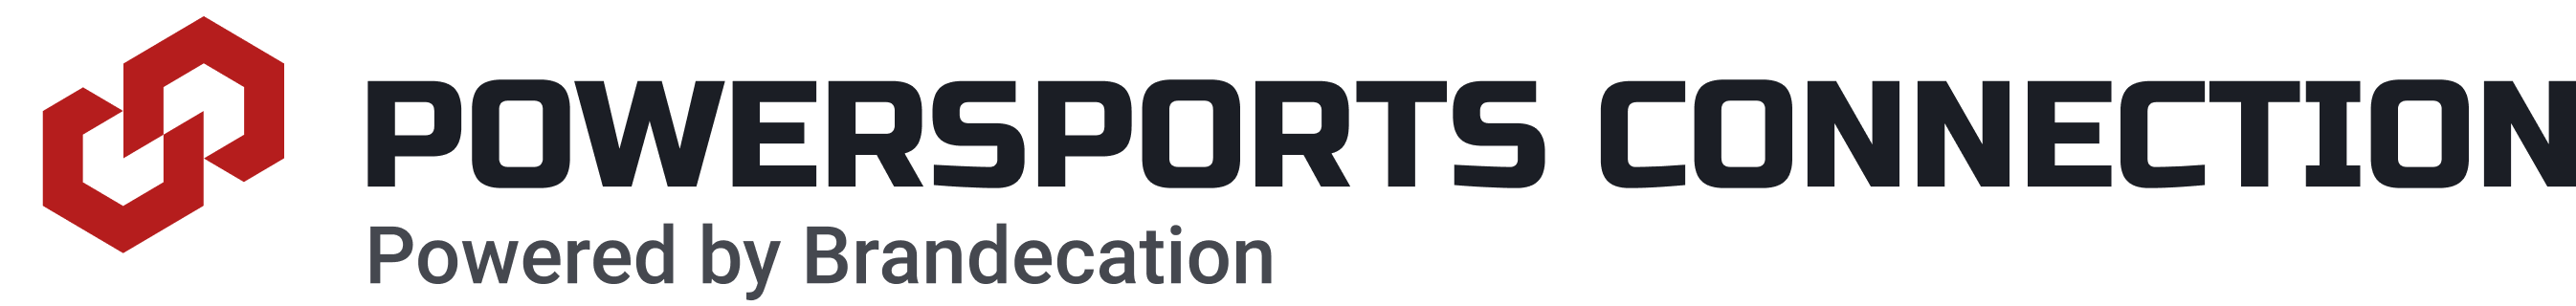 powersports-connection-logo-black